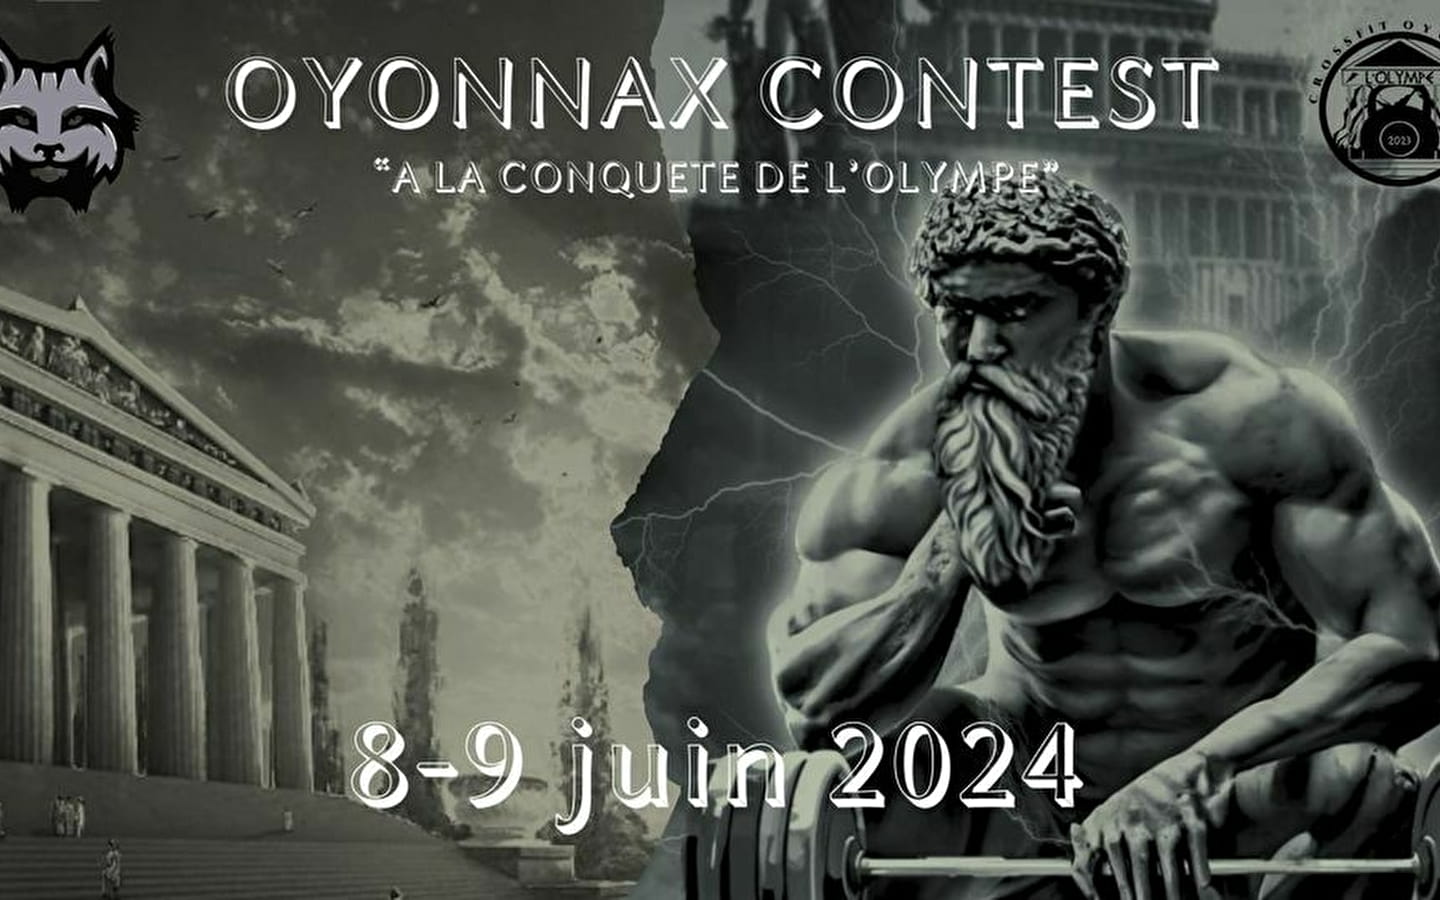 Oyonnax Contest